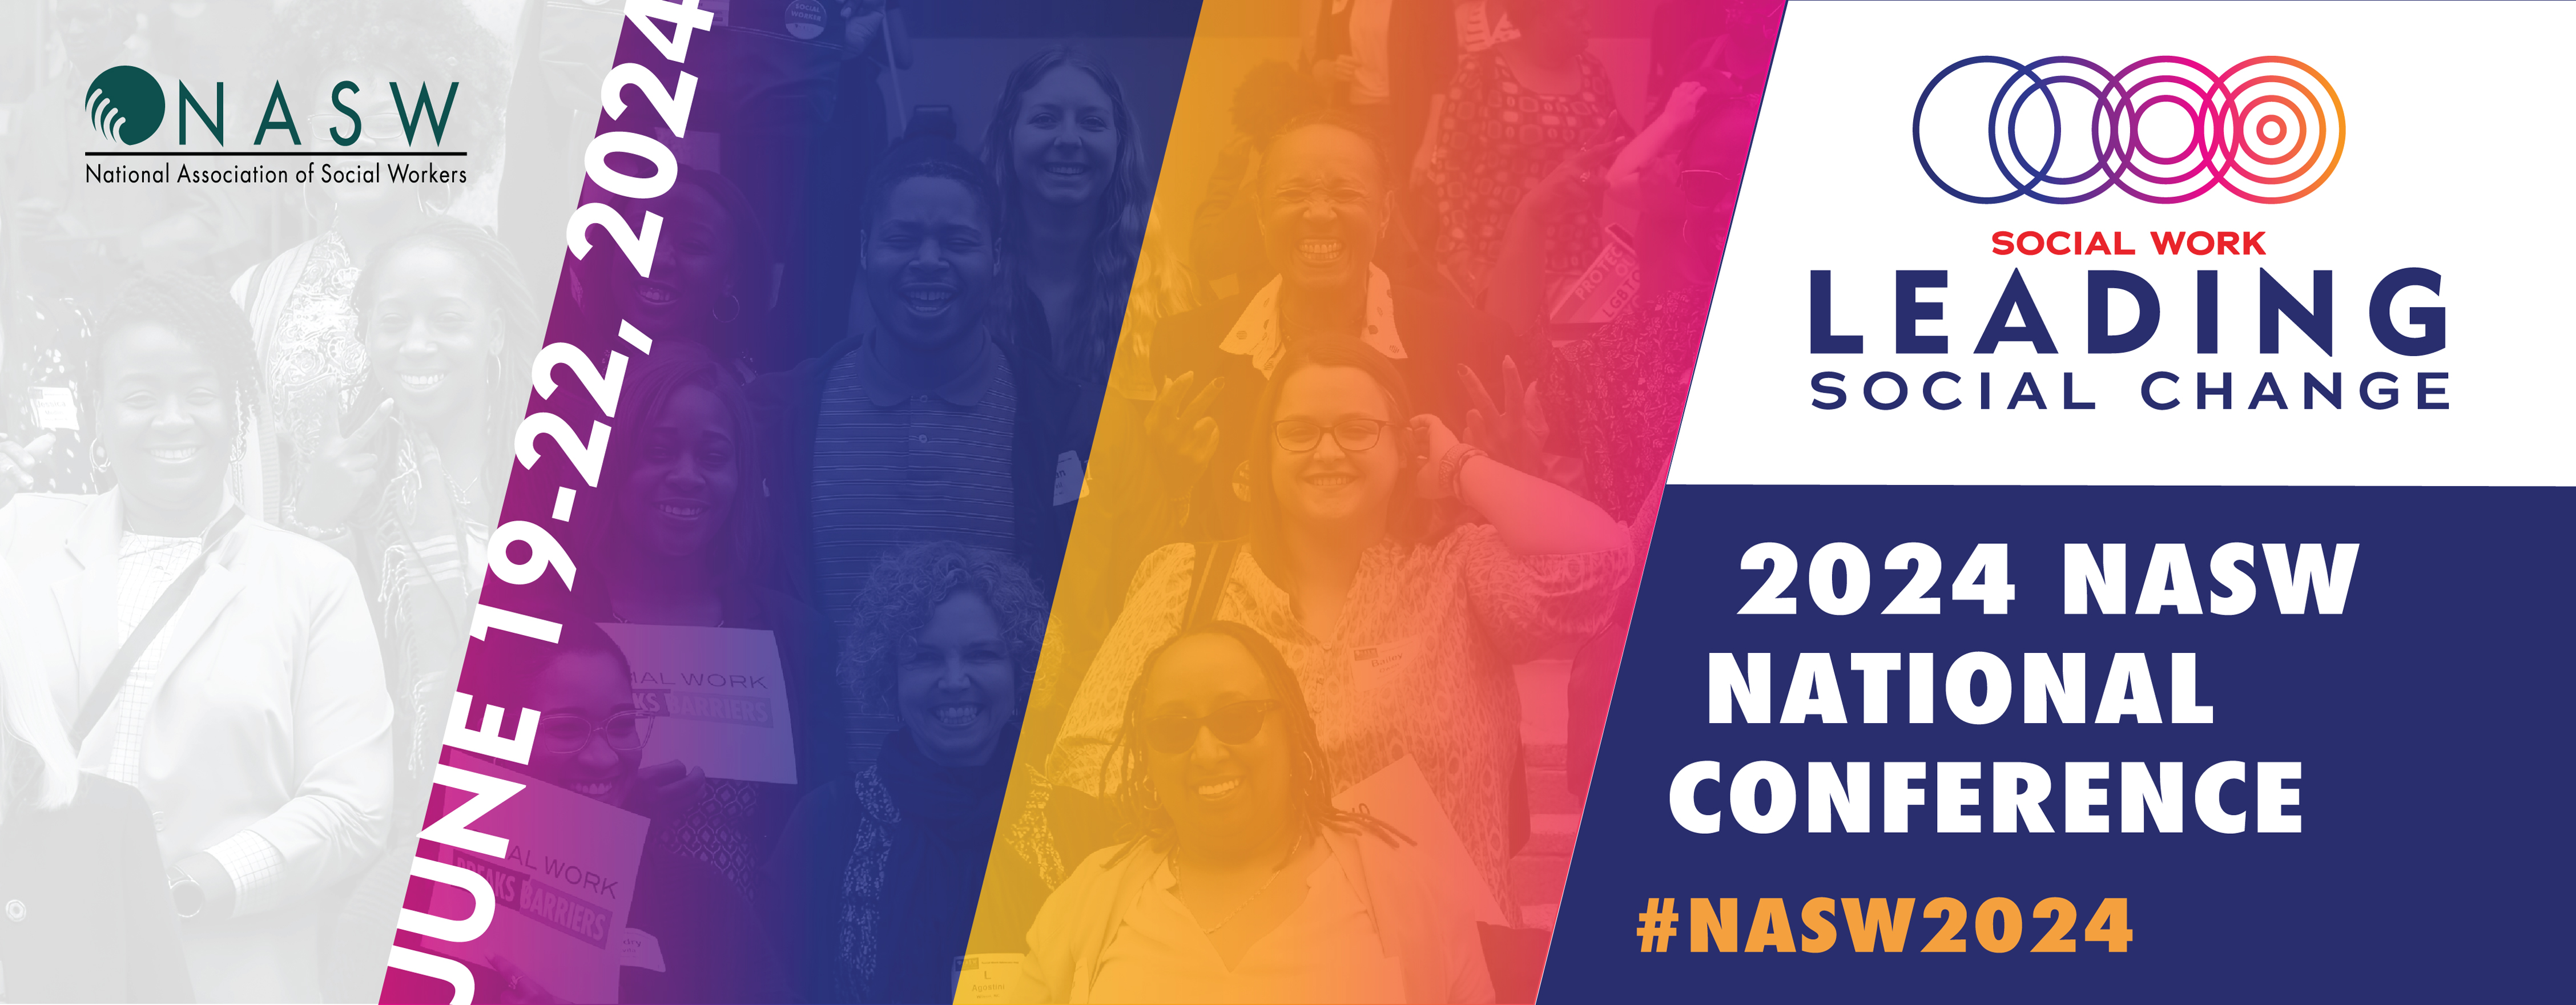 2024 NASW National Conference Social Work Leading Social Change June 19-22 2024